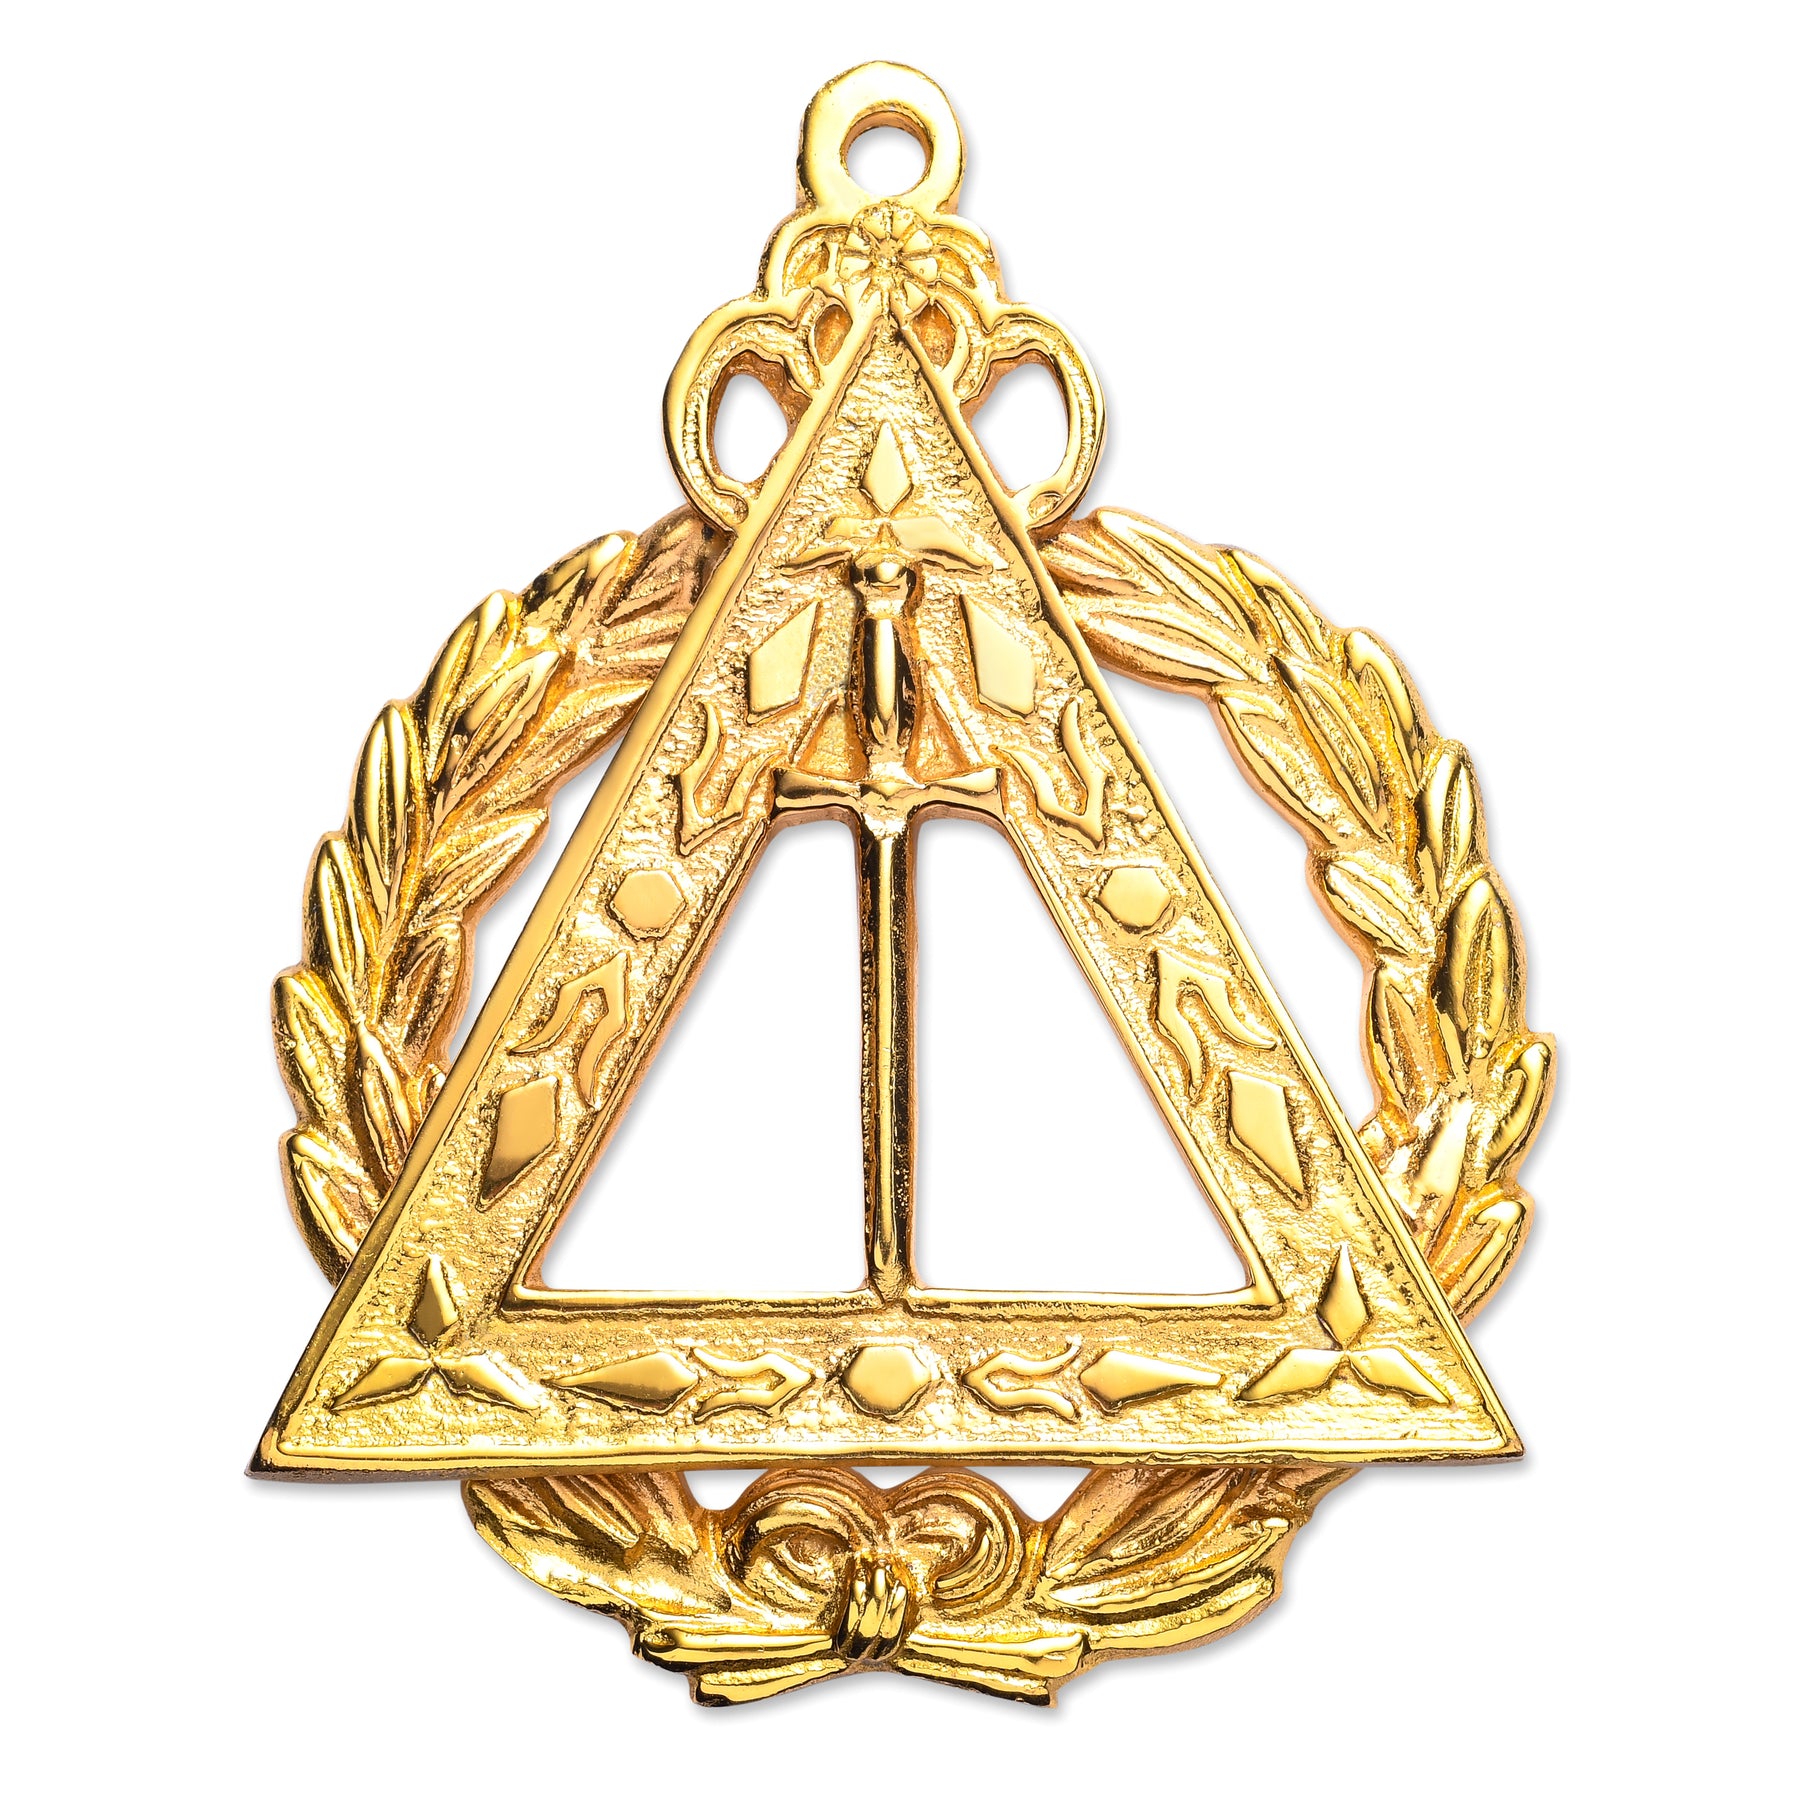 First Veil Royal Arch Chapter Officer Collar Jewel - Gold Metal - Bricks Masons